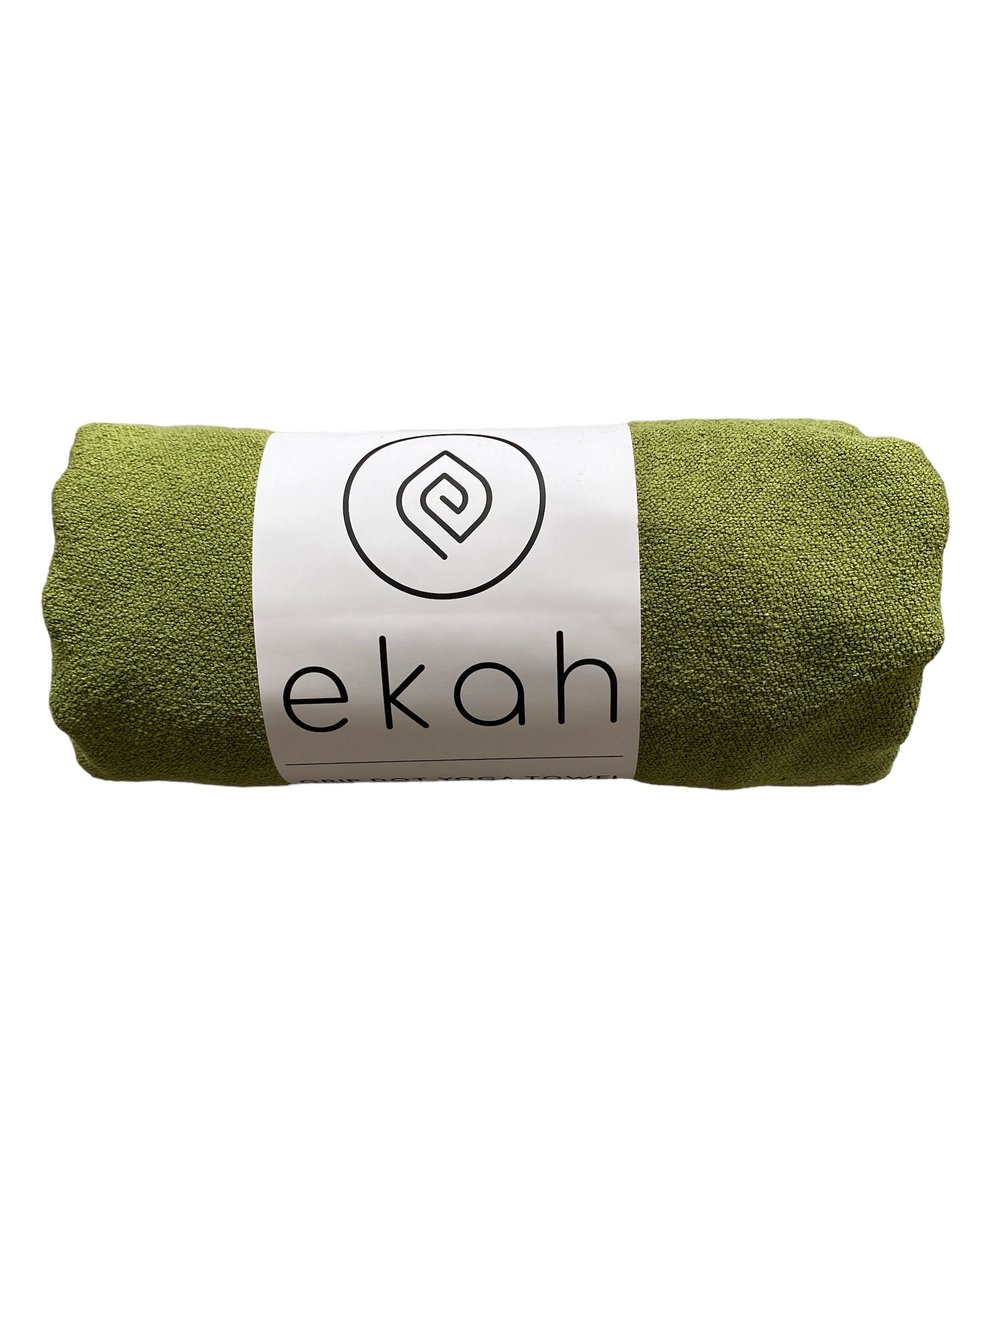 grip dot hot yoga towel high quality — ekah yoga